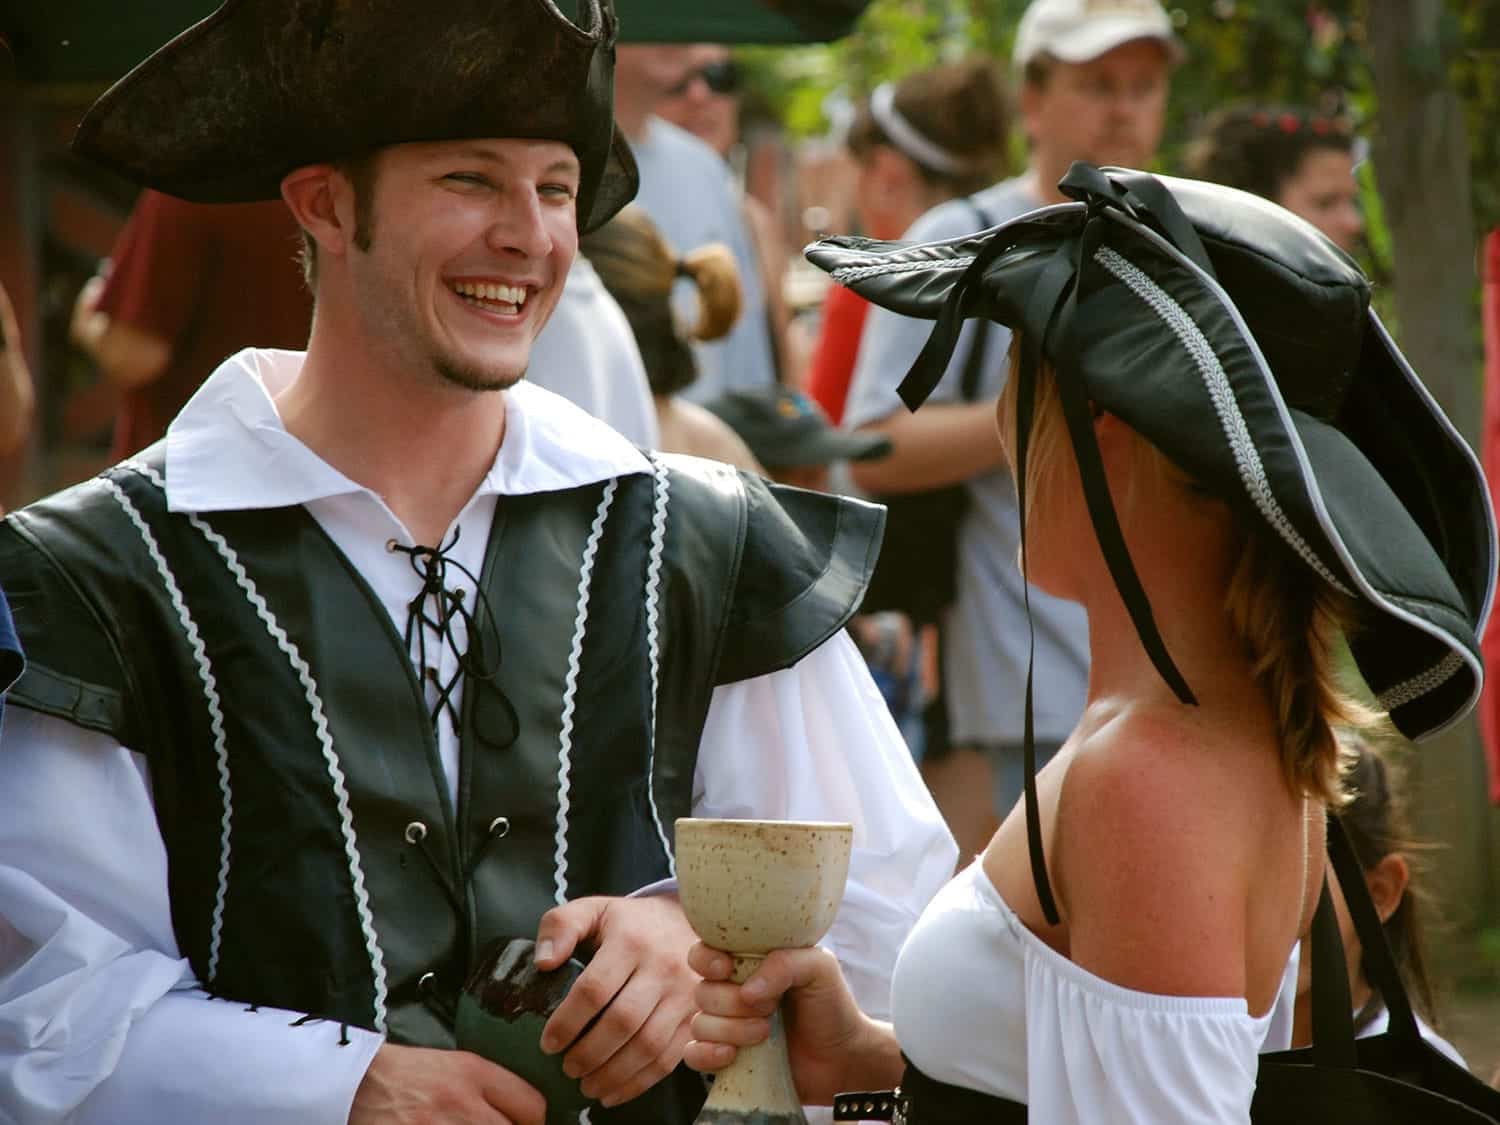 pirate festival florida, fort walton beach festival, north florida fun